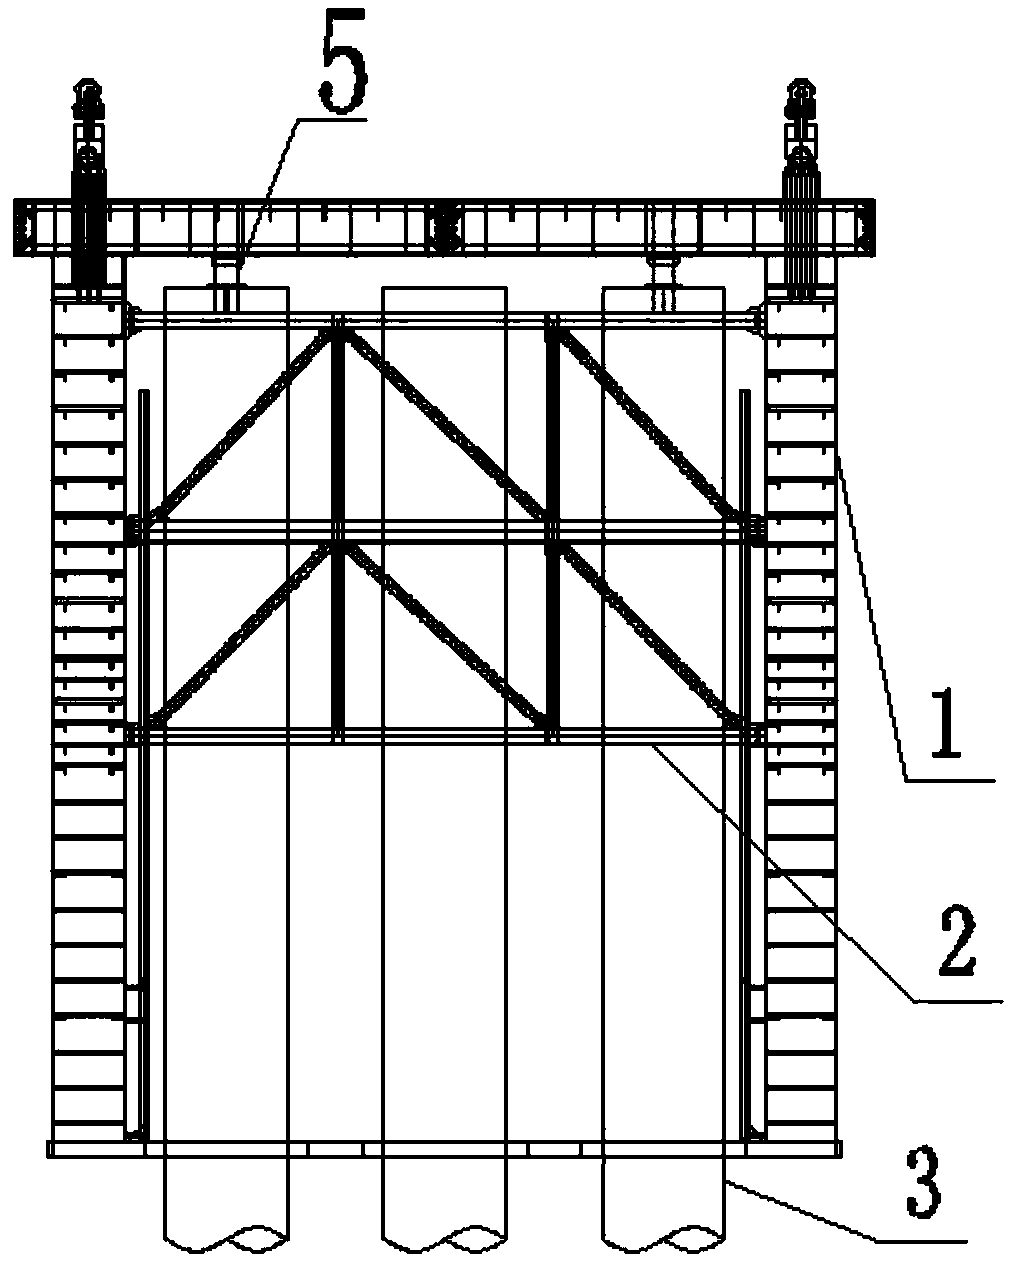 Cofferdam and hoisting descending construction method thereof